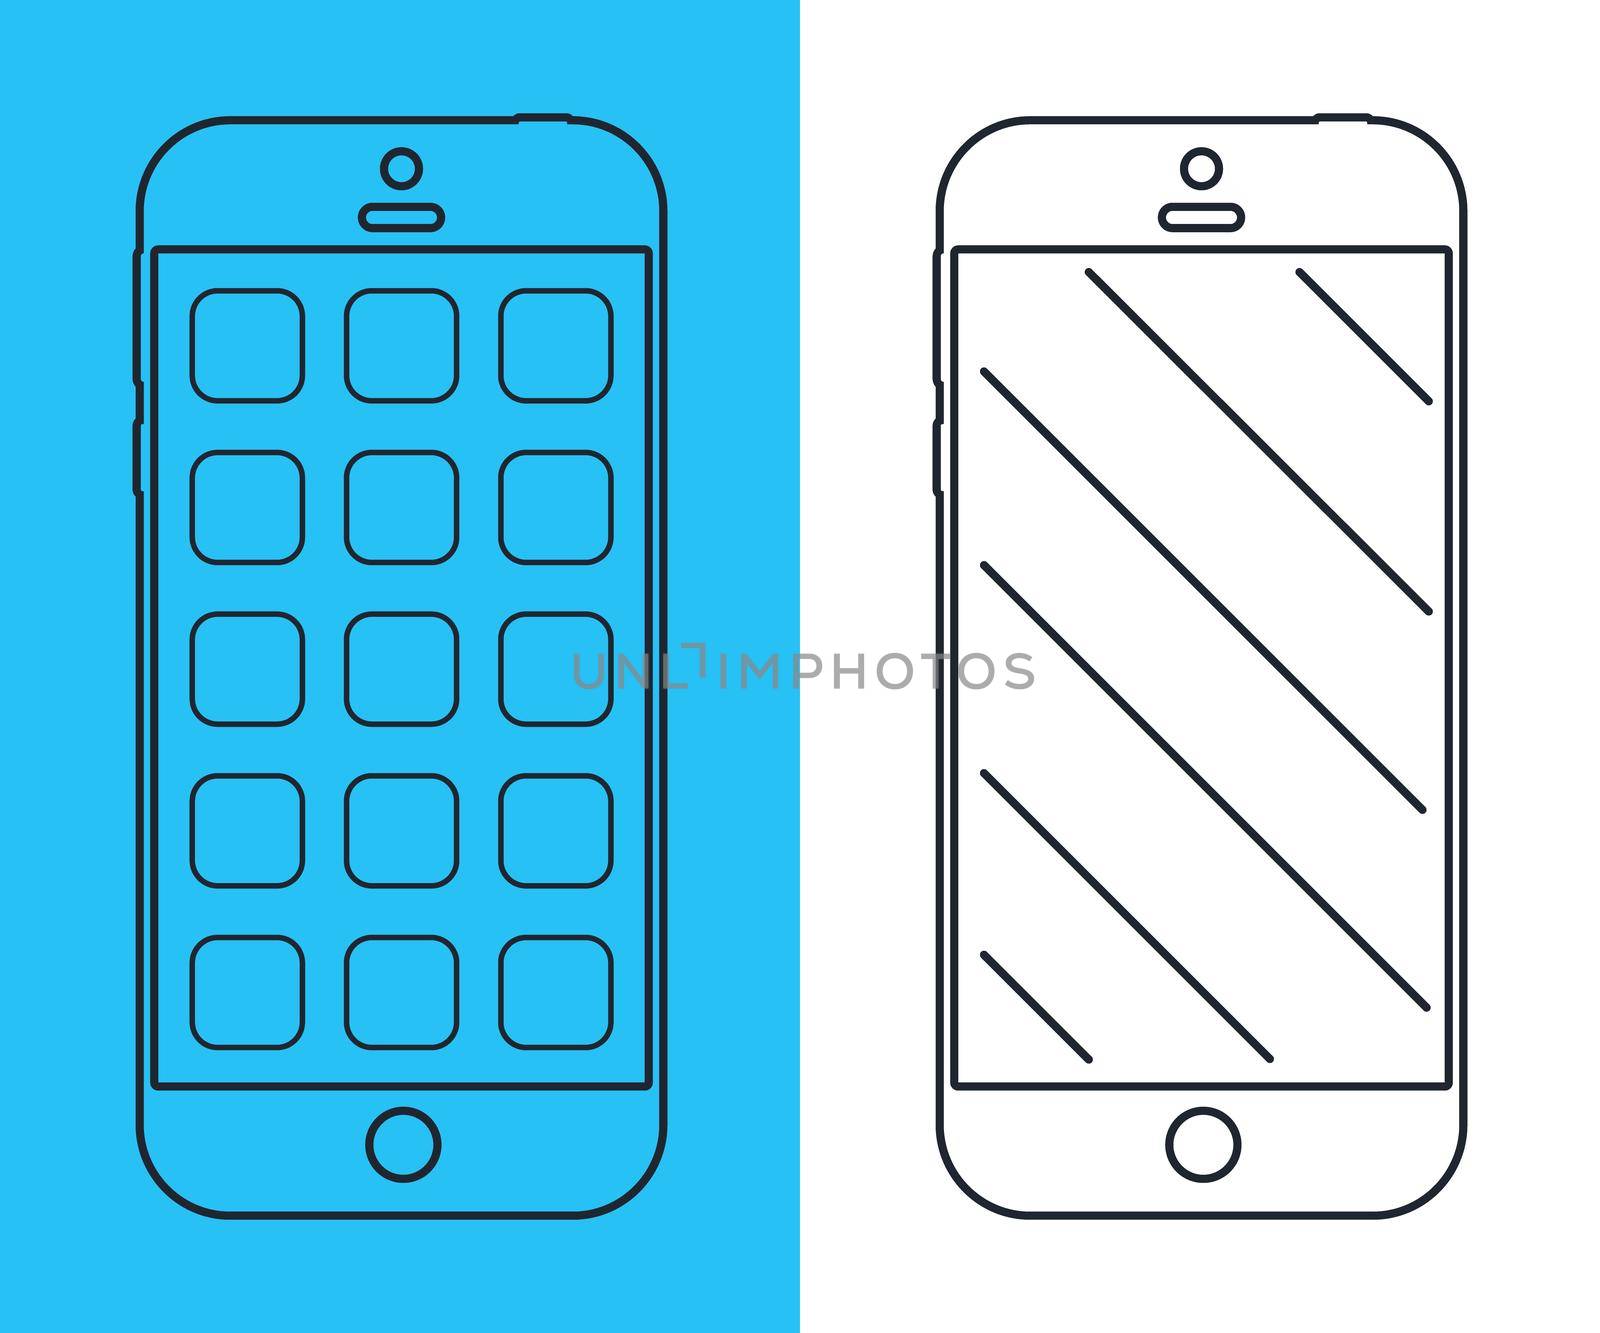 Smartphones. Mobile phone thin line design. Smart phones vector illustration.